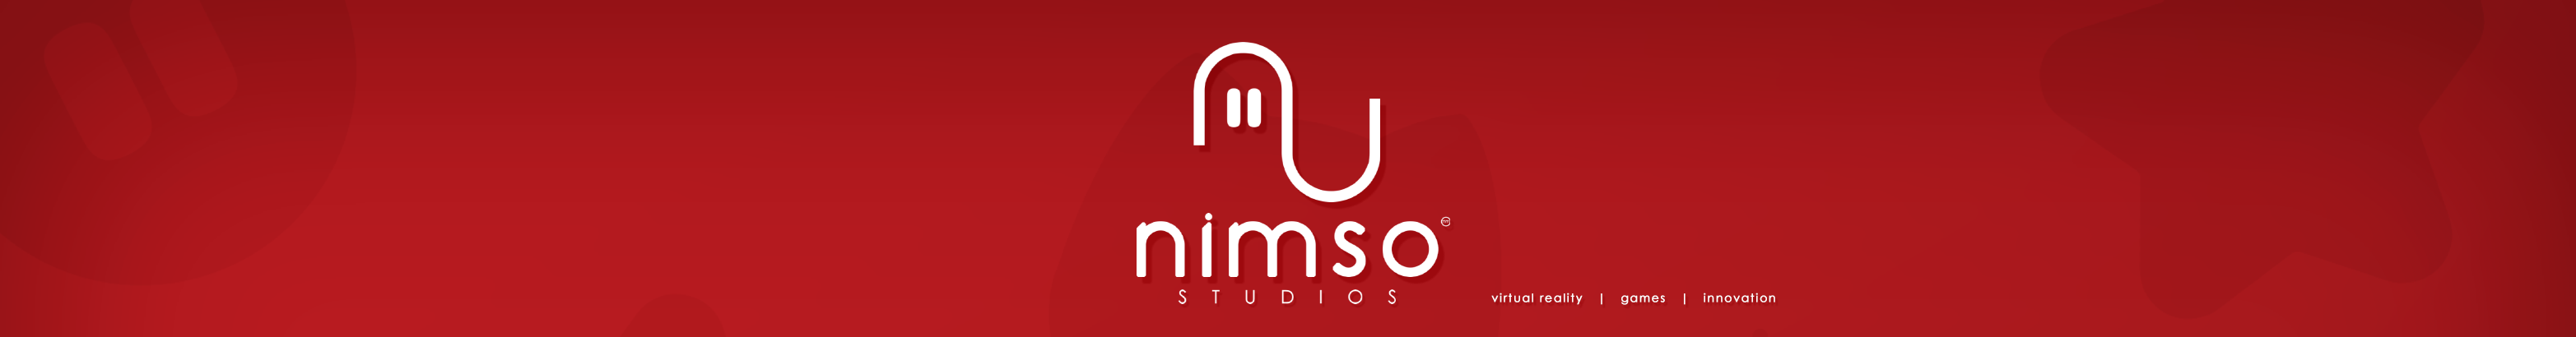 Nimso Studios's profile banner